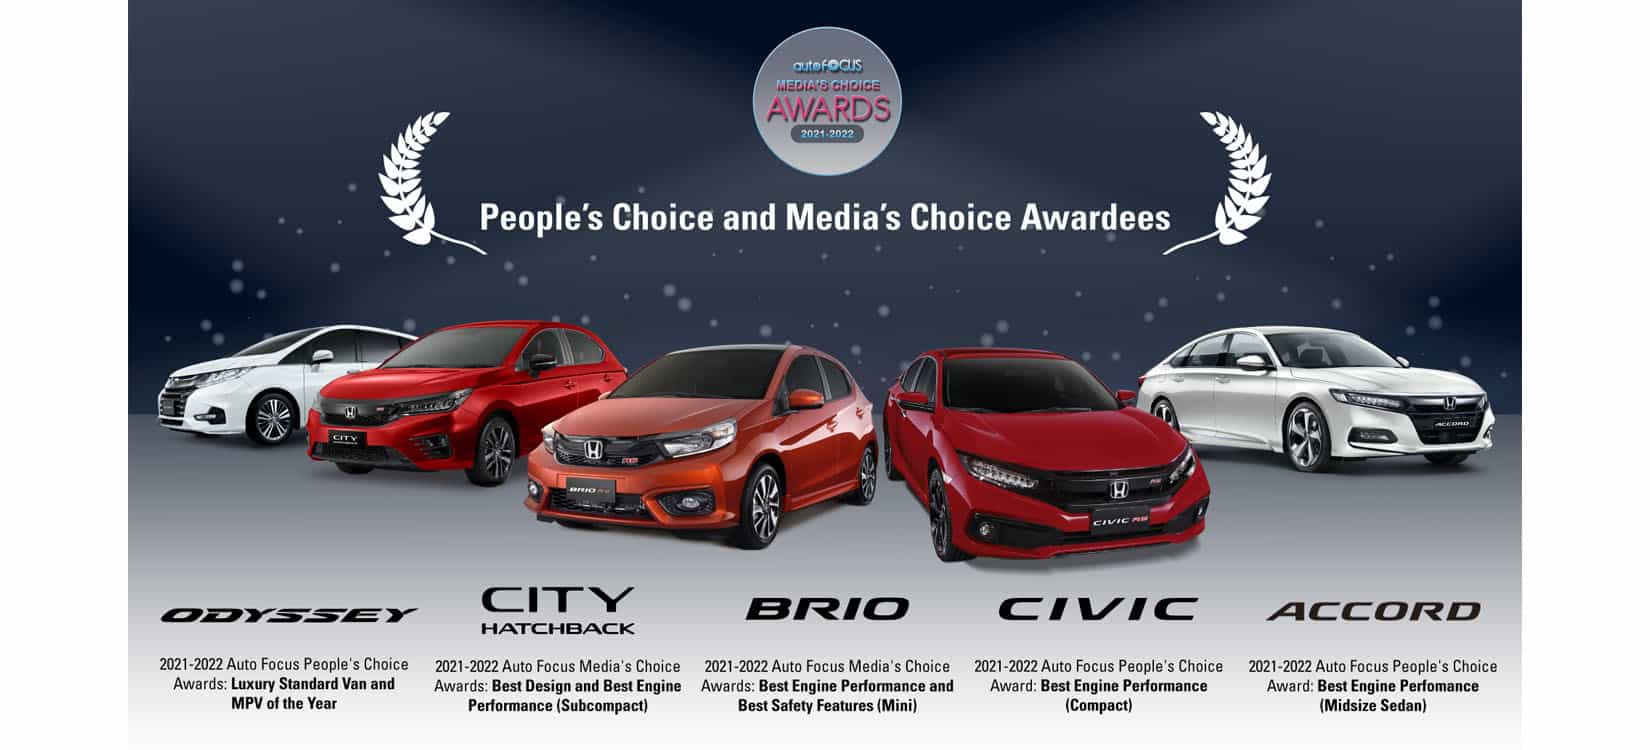 Honda Cars Philippines, Inc. Bags 7 Wins at STV 2021-2022 Autofocus Peopleâ€™s & Mediaâ€™s Choice Awards